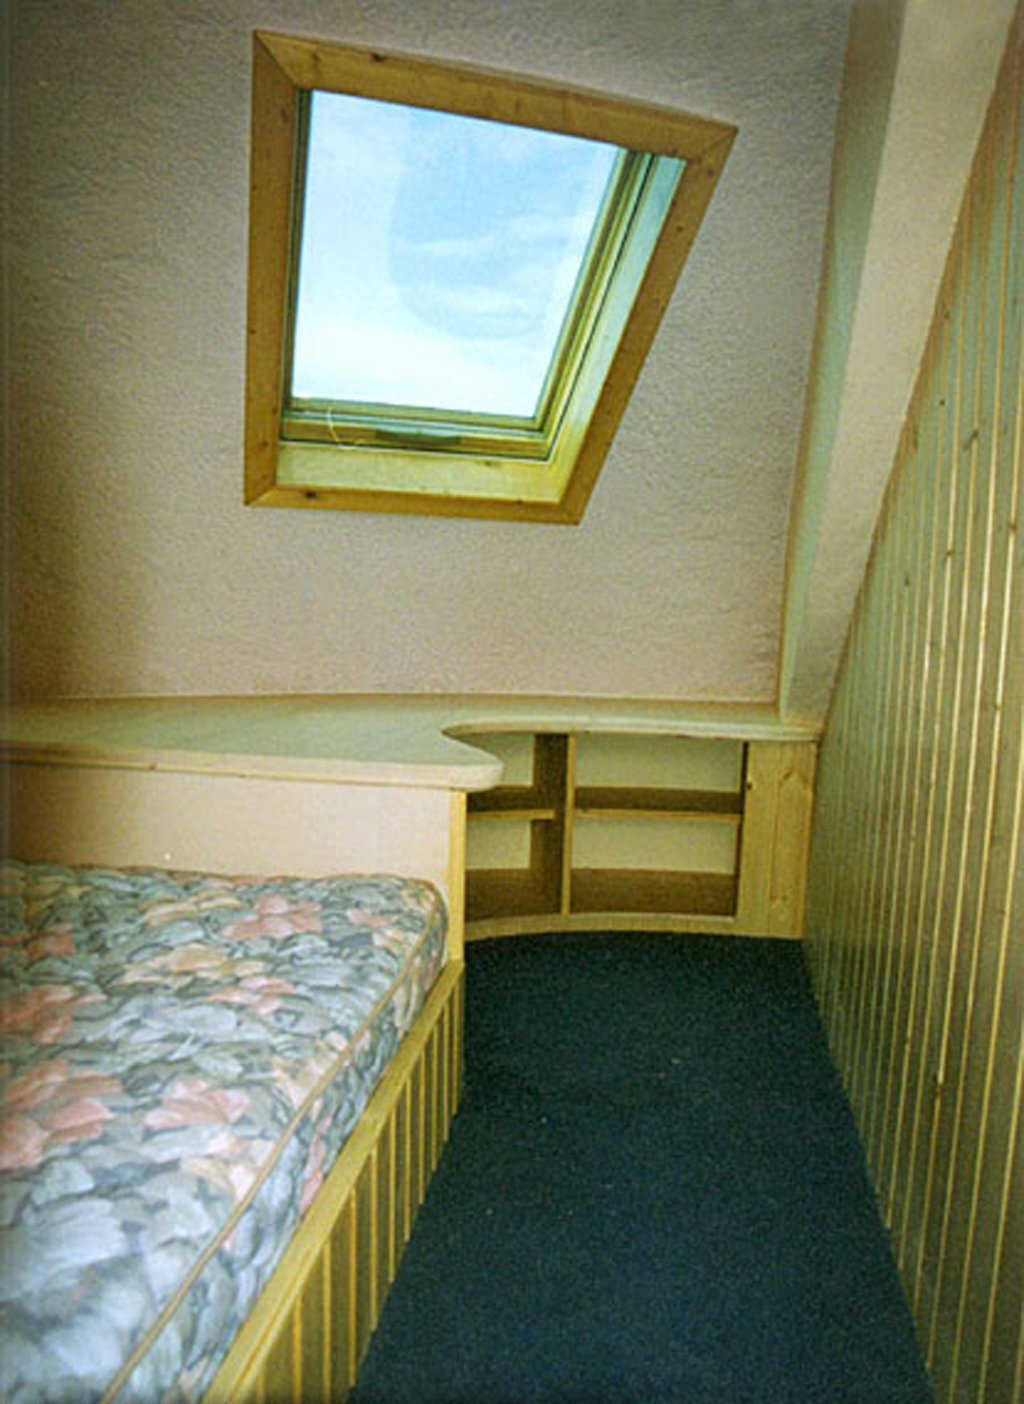 Upstairs bedroom — Both bedrooms include built-in beds and desks.